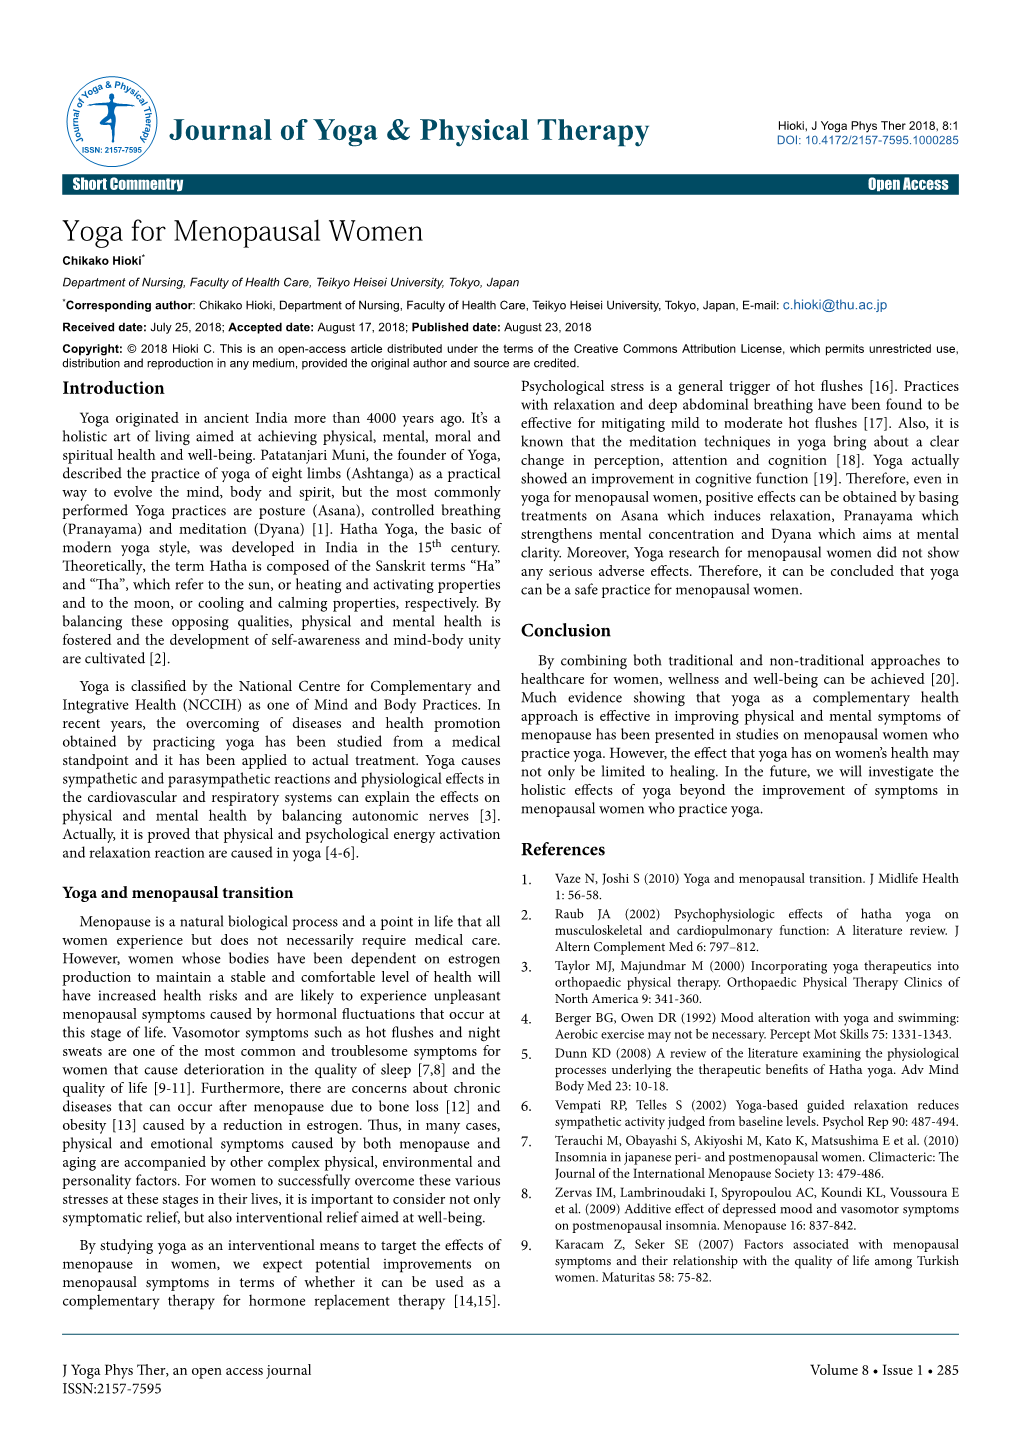 Yoga for Menopausal Women